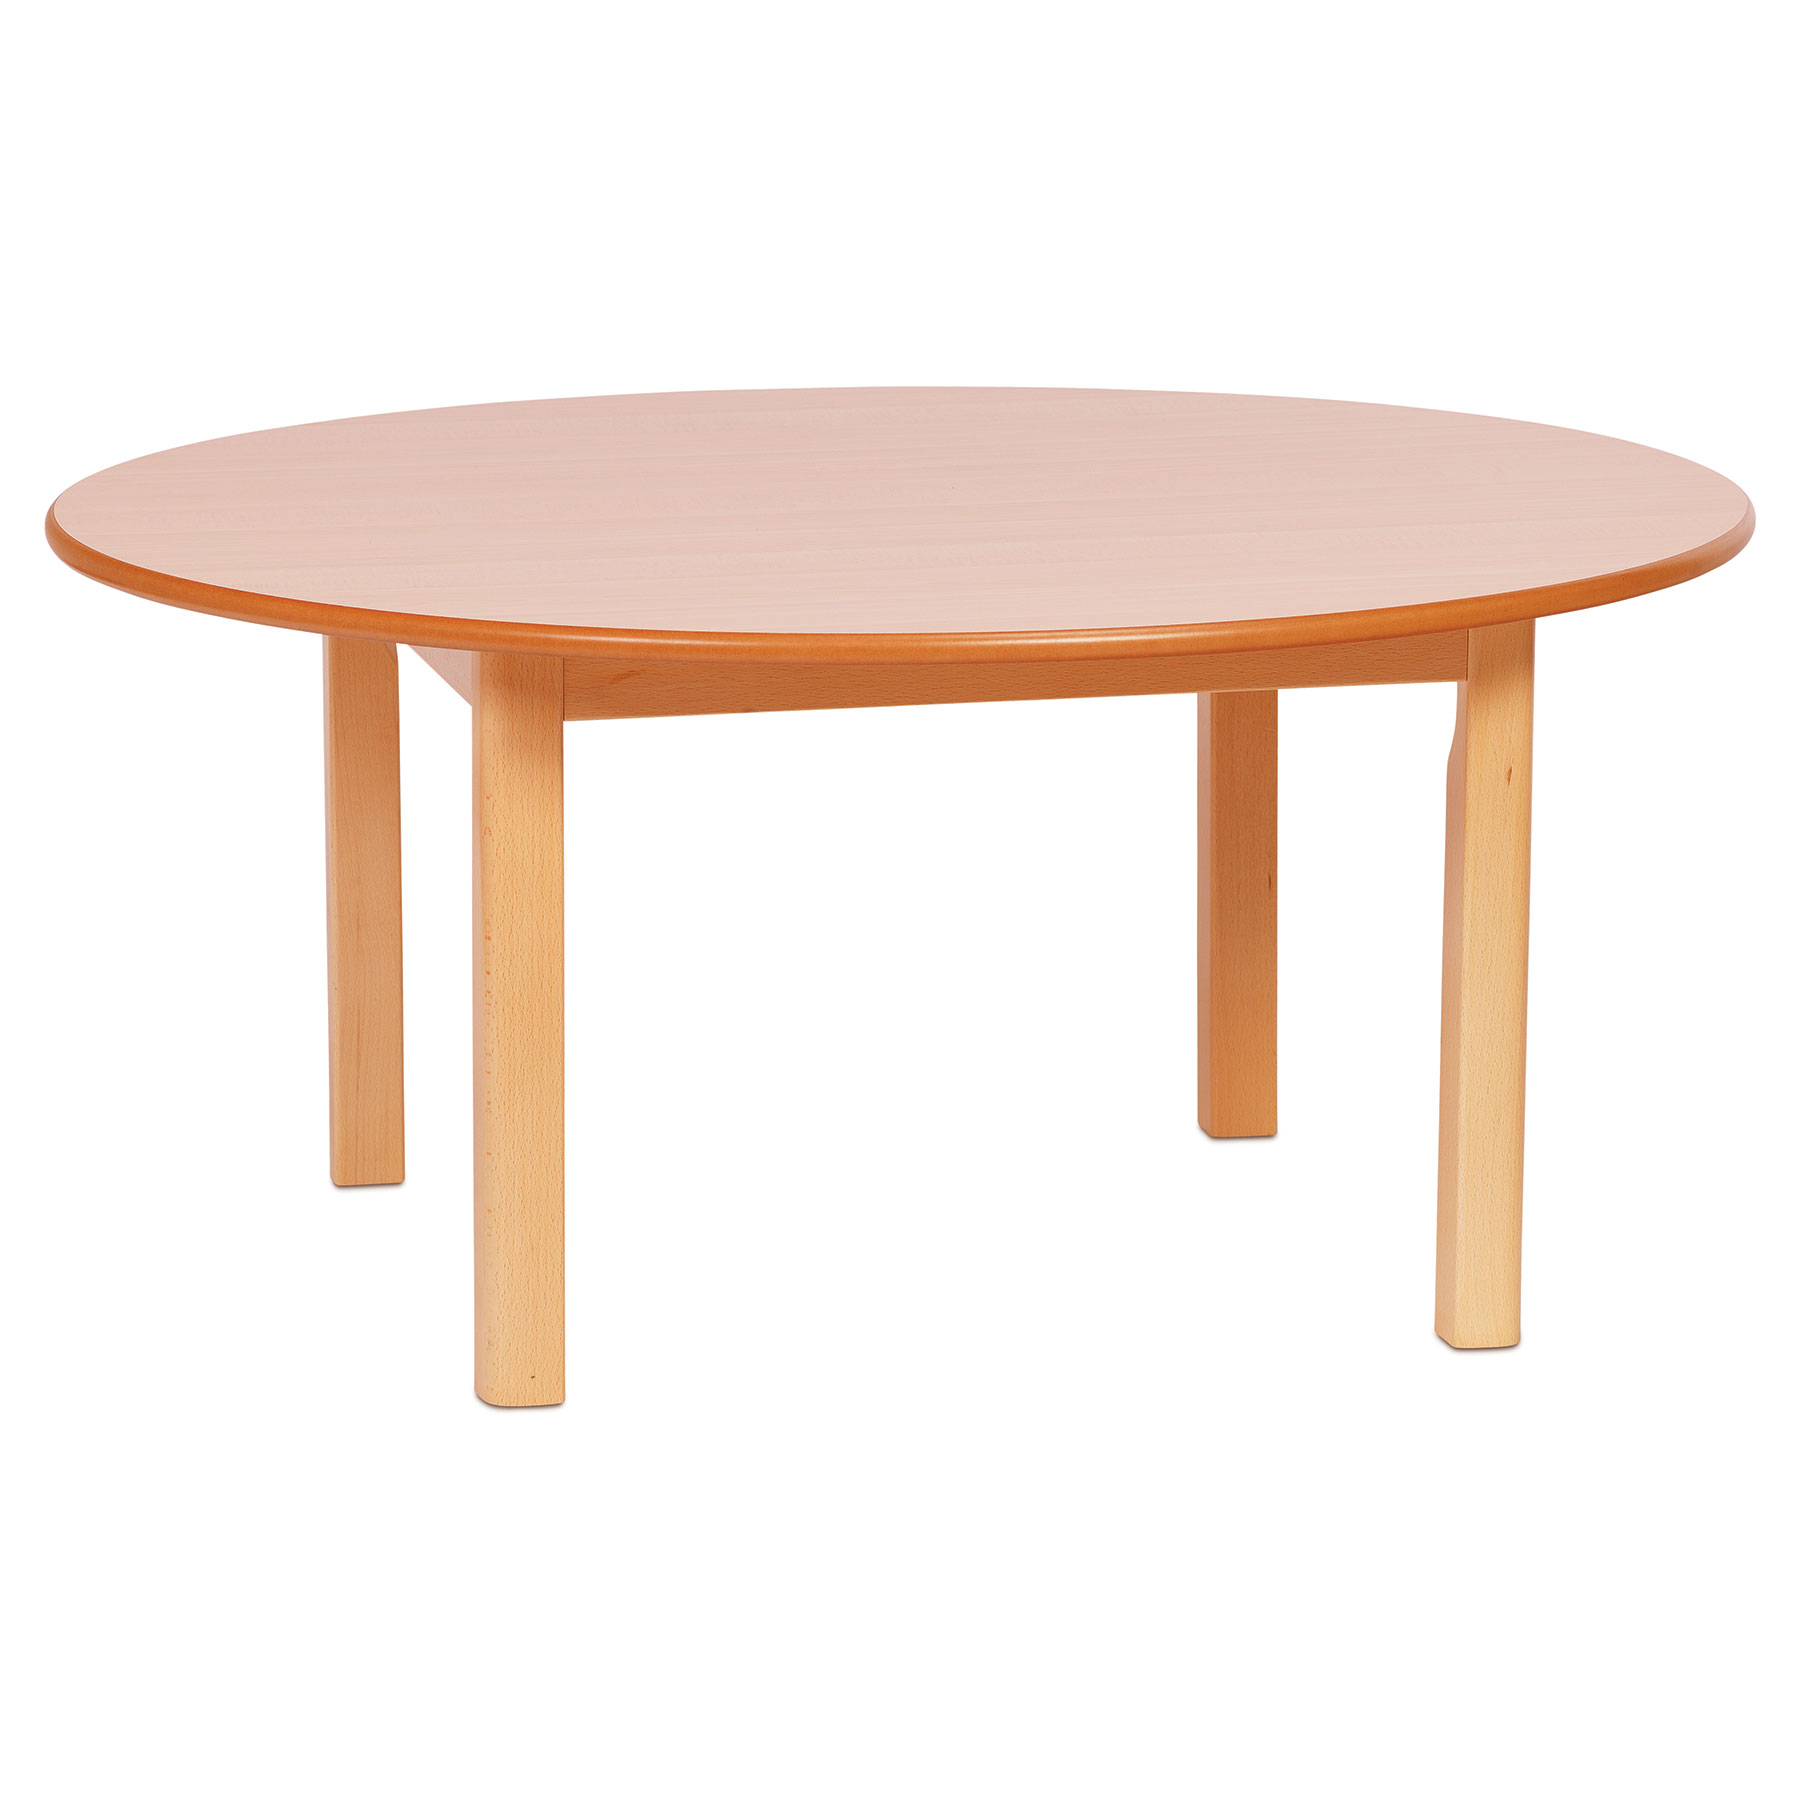 Beech Wood Round Classroom Table